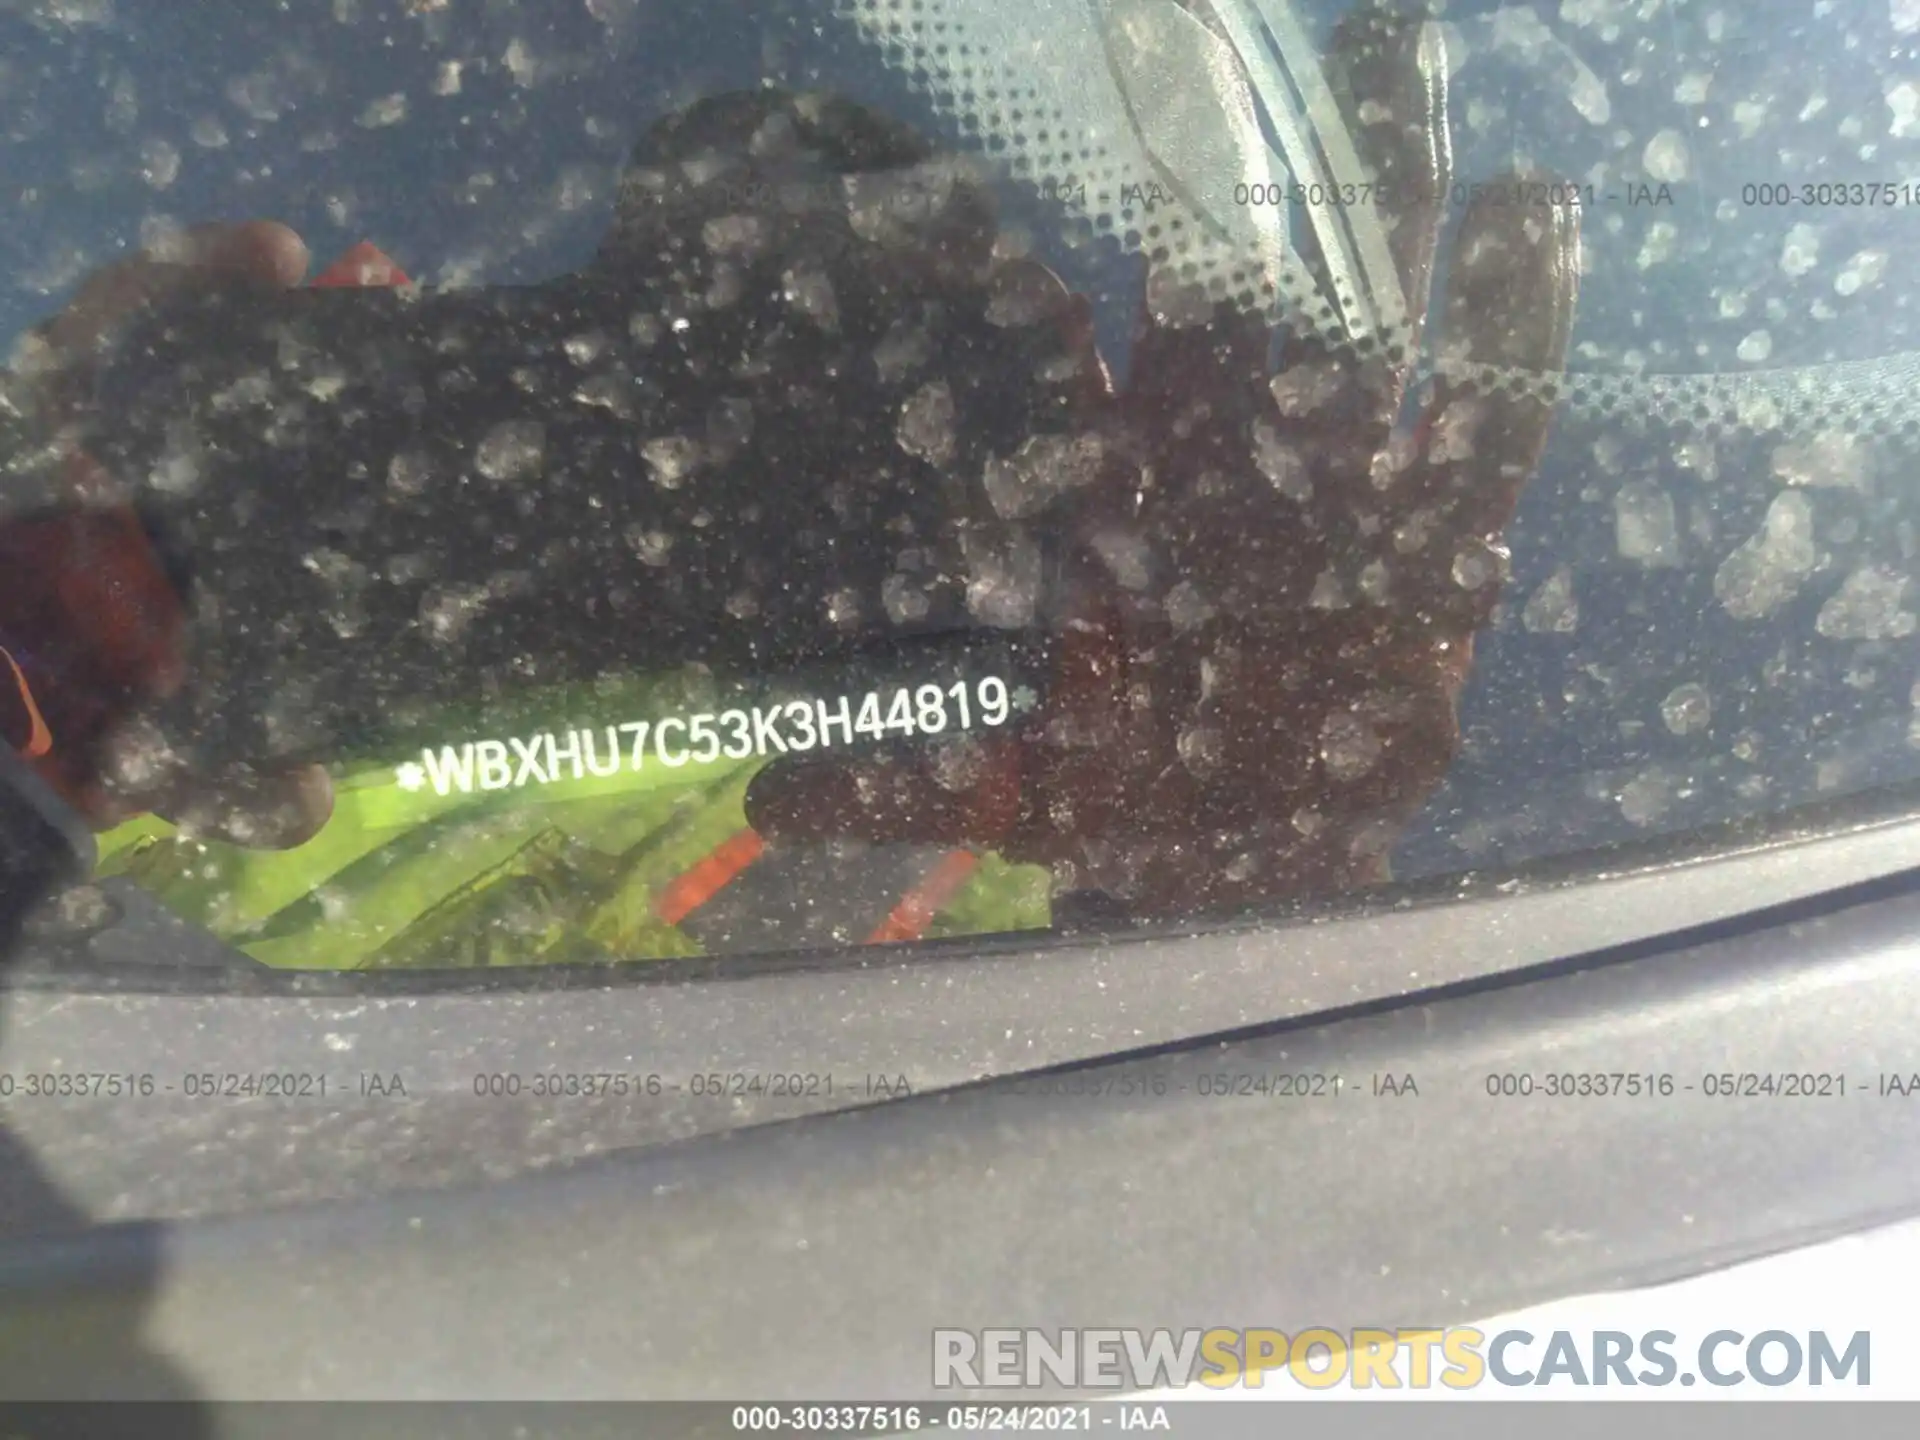 9 Photograph of a damaged car WBXHU7C53K3H44819 BMW X1 2019